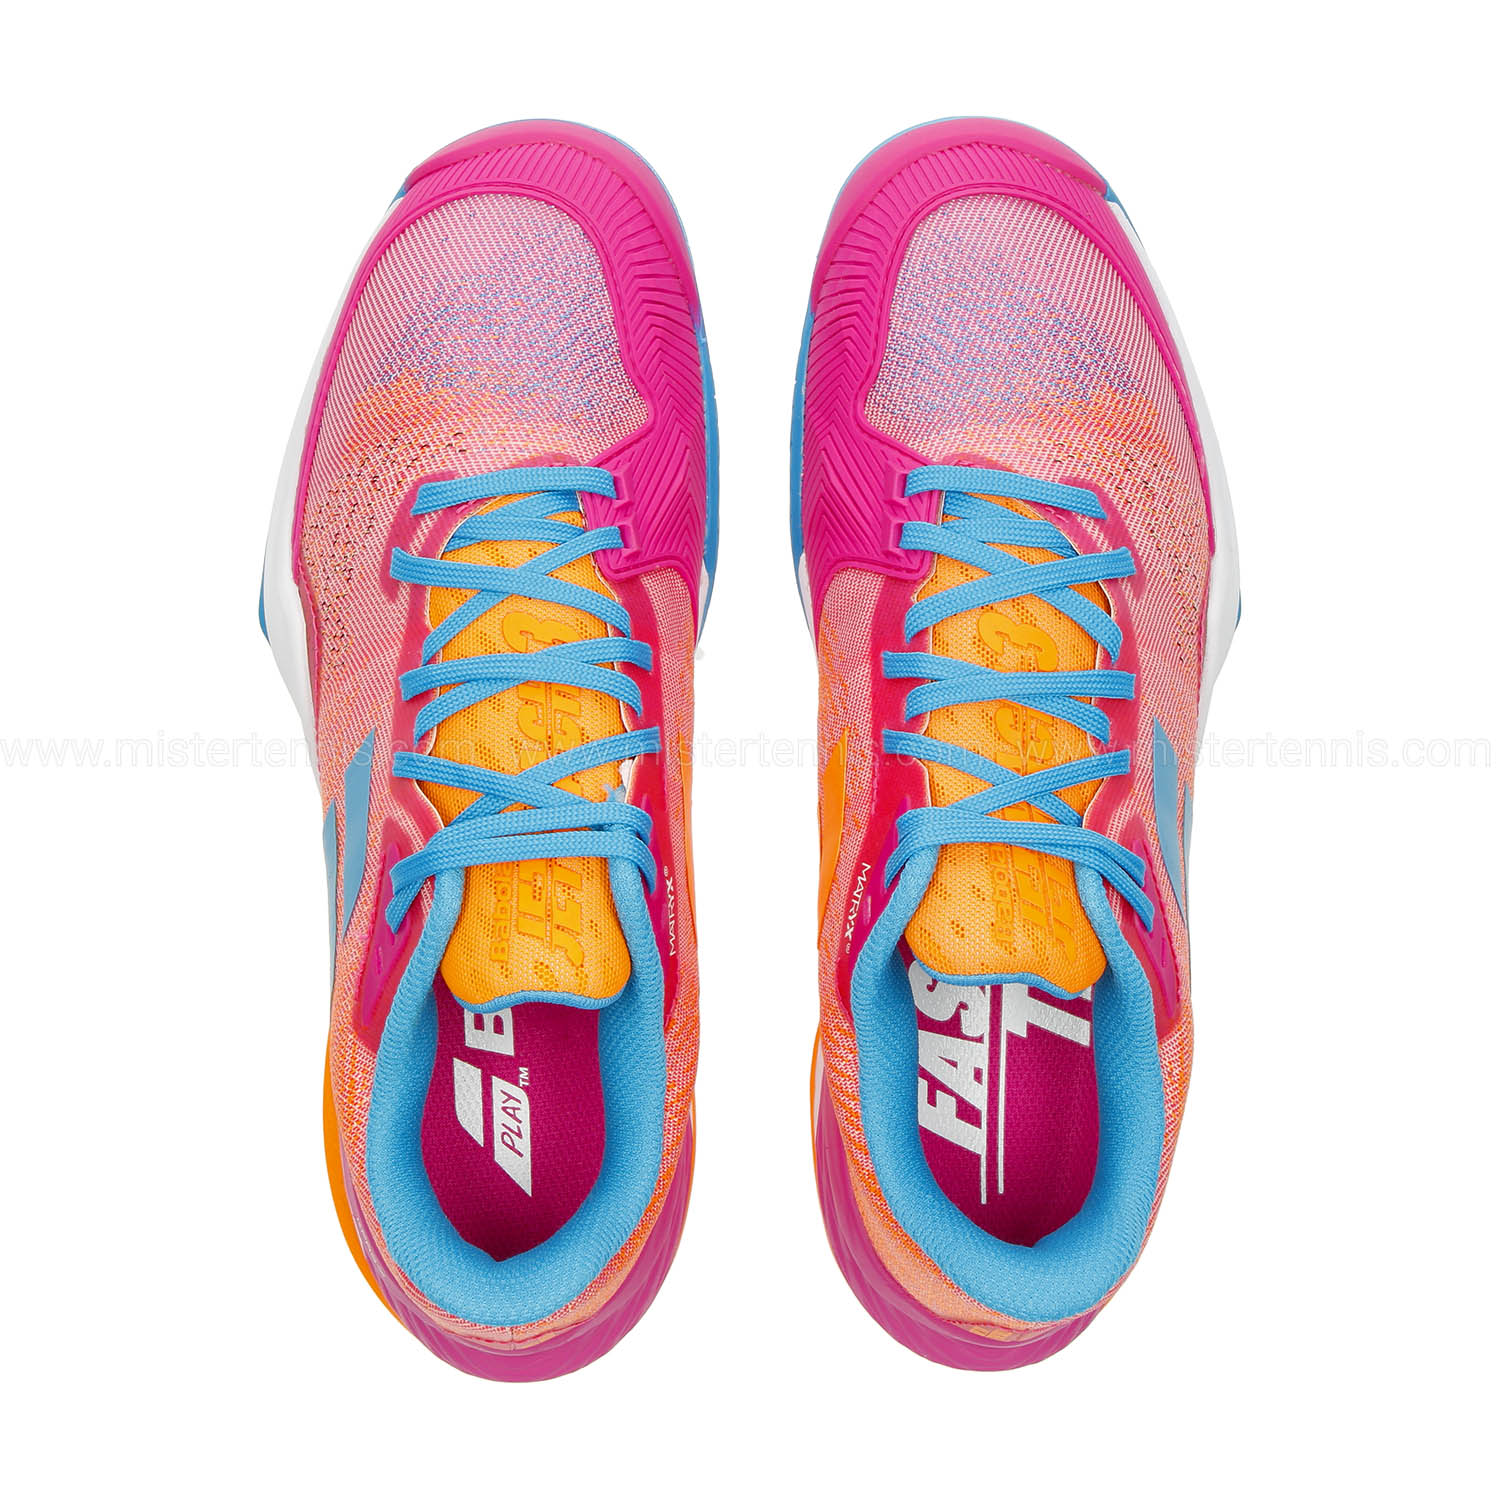 Babolat Jet Mach 3 All Court Women's Tennis Shoes - Hot Pink